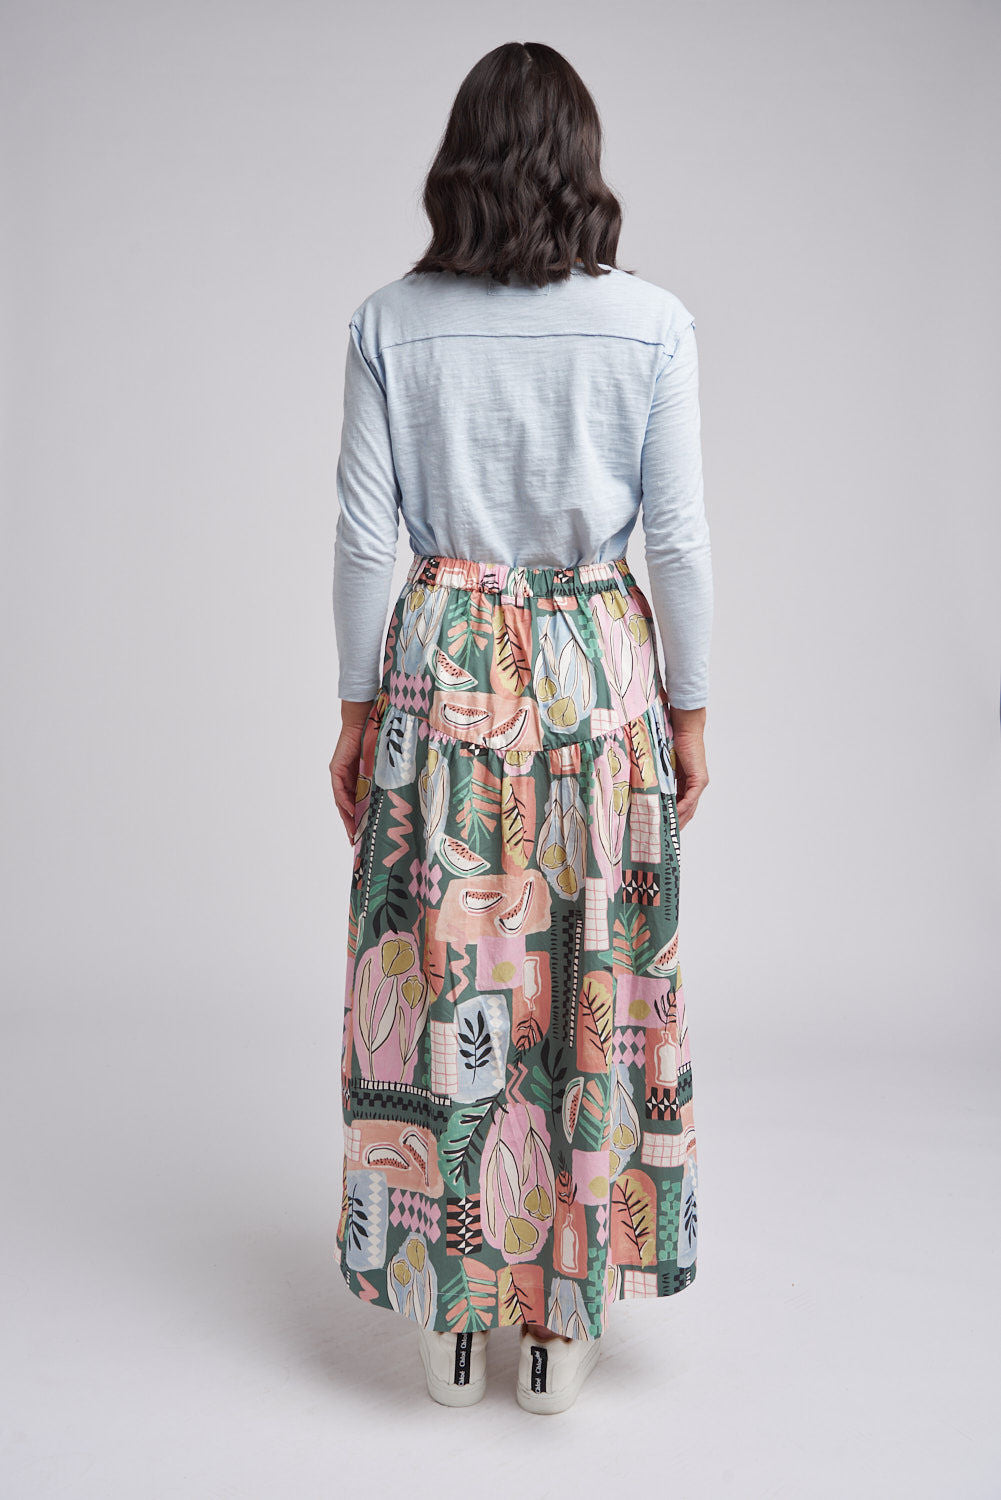 Cloth+Paper+Scissors Poppy Print Skirt